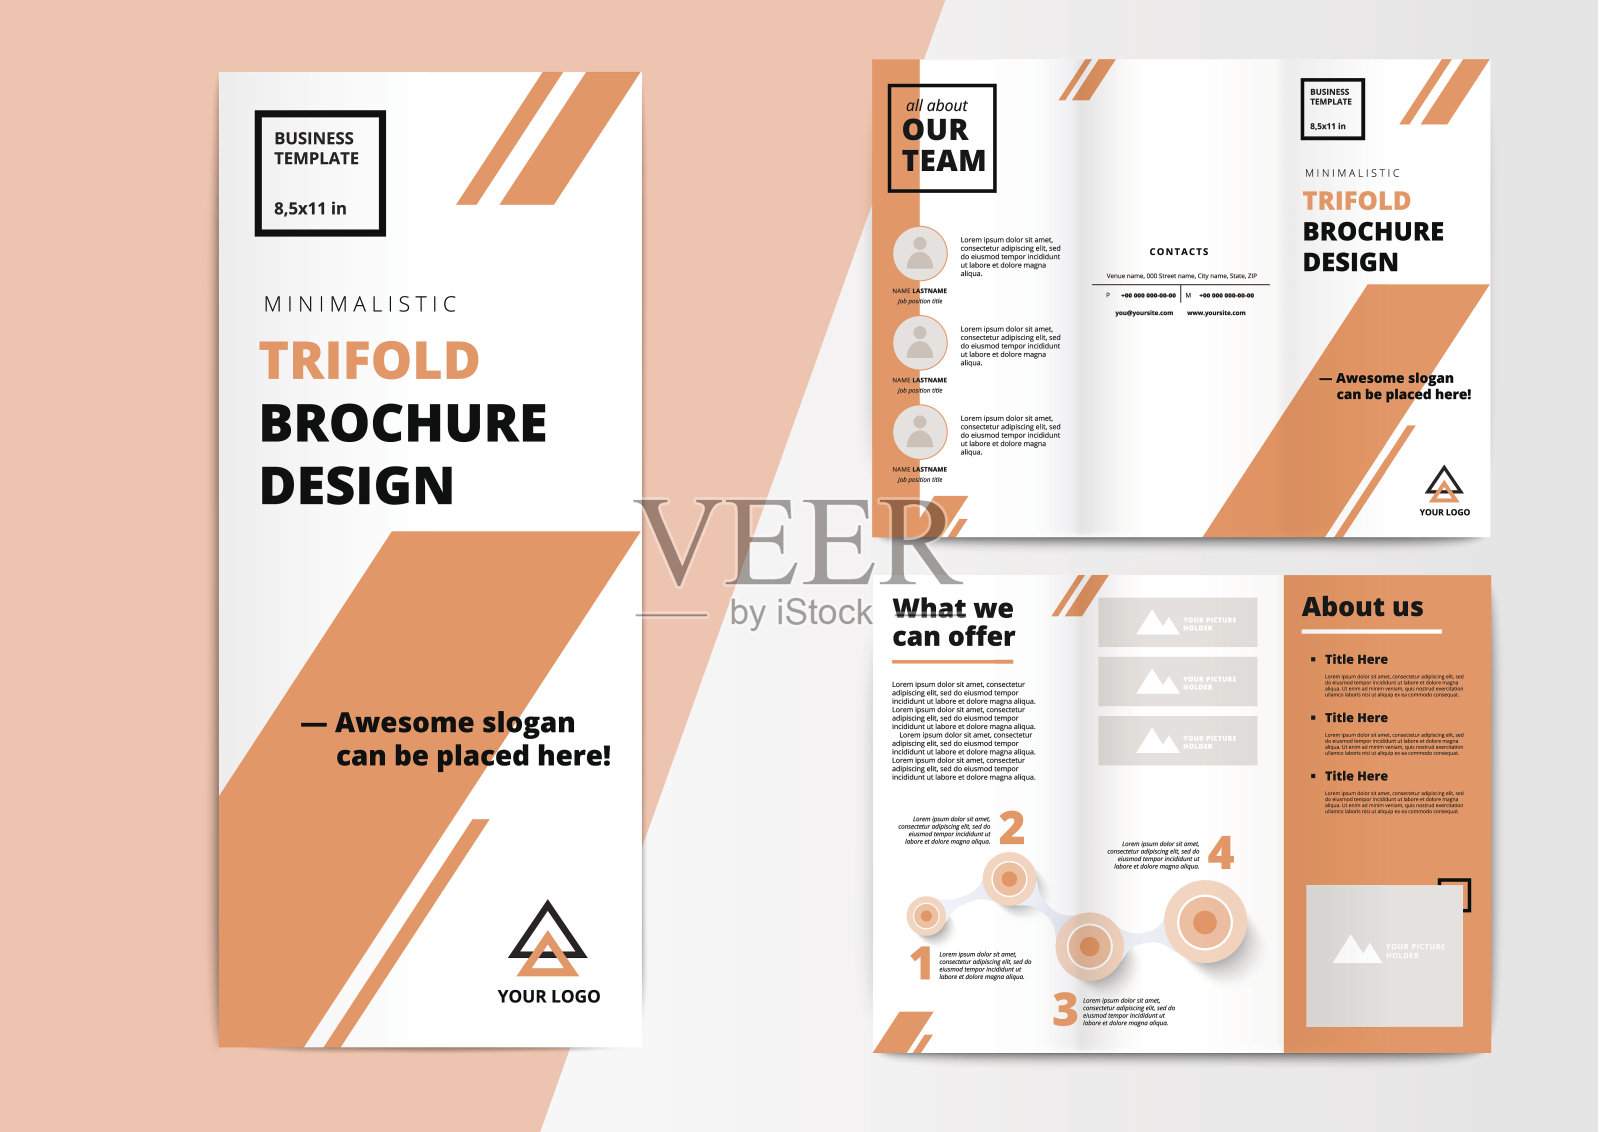 Сorporate展示三重宣传册设计。创新业务设计模板素材